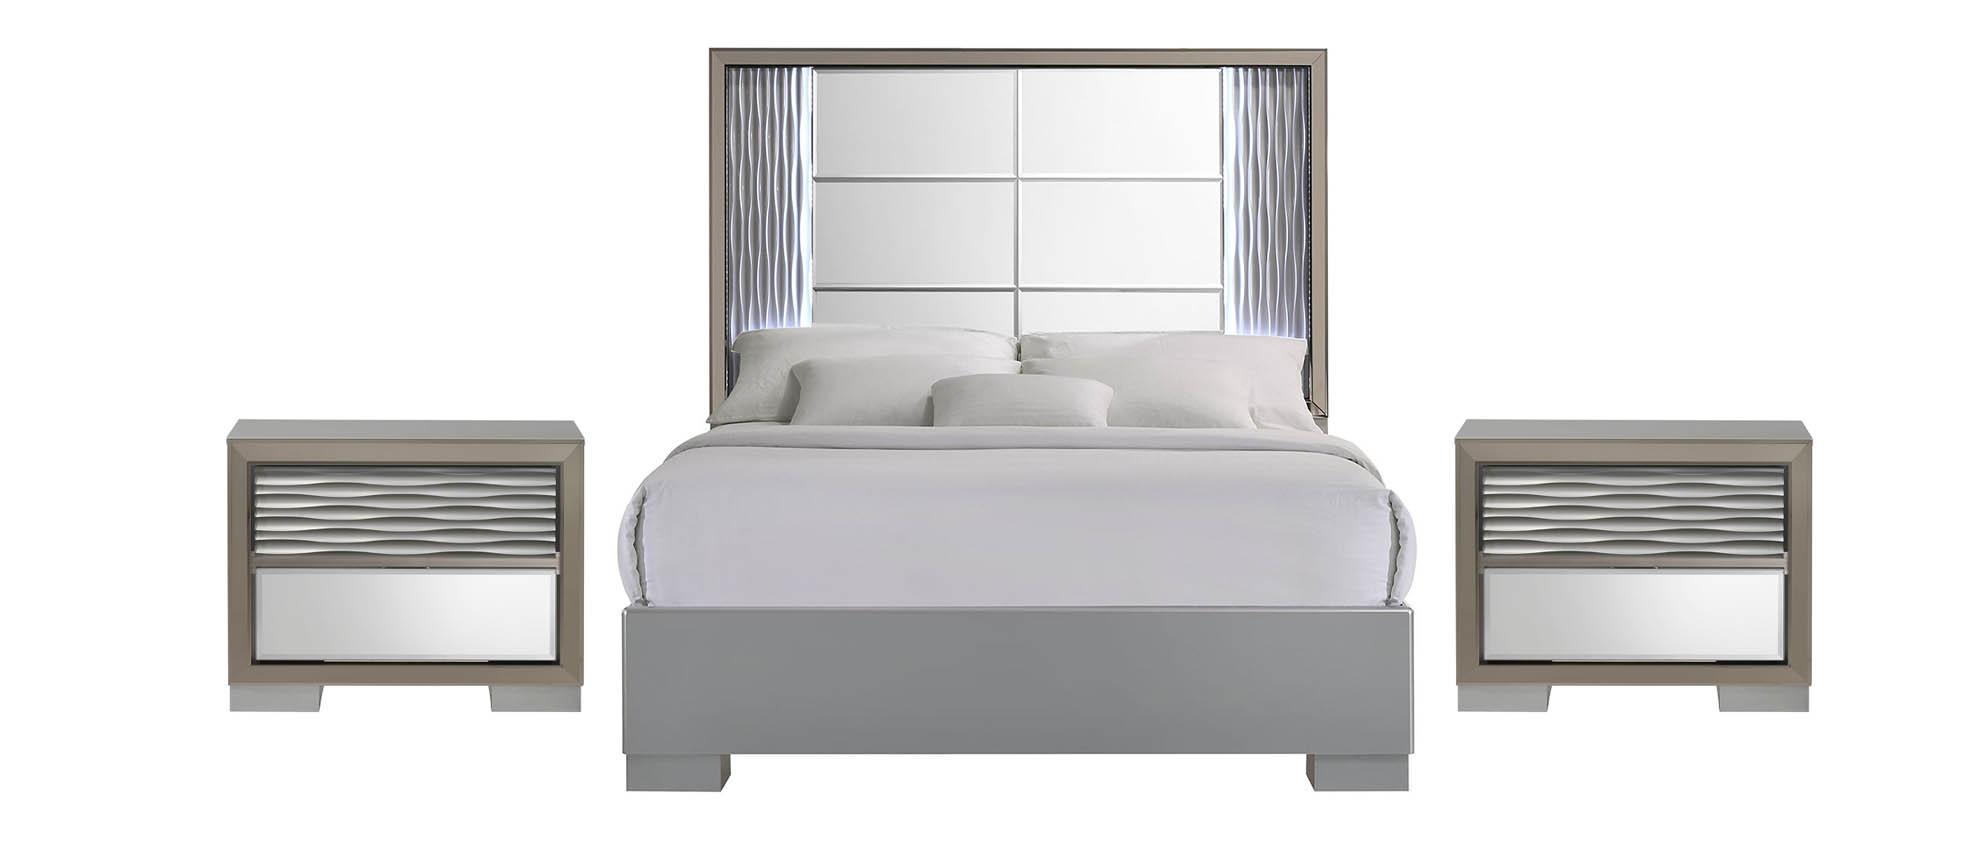 Contemporary Platform Bedroom Set SKYLINE SKYLINE-SILVER-KB-Set-3 in Mirrored, Silver 